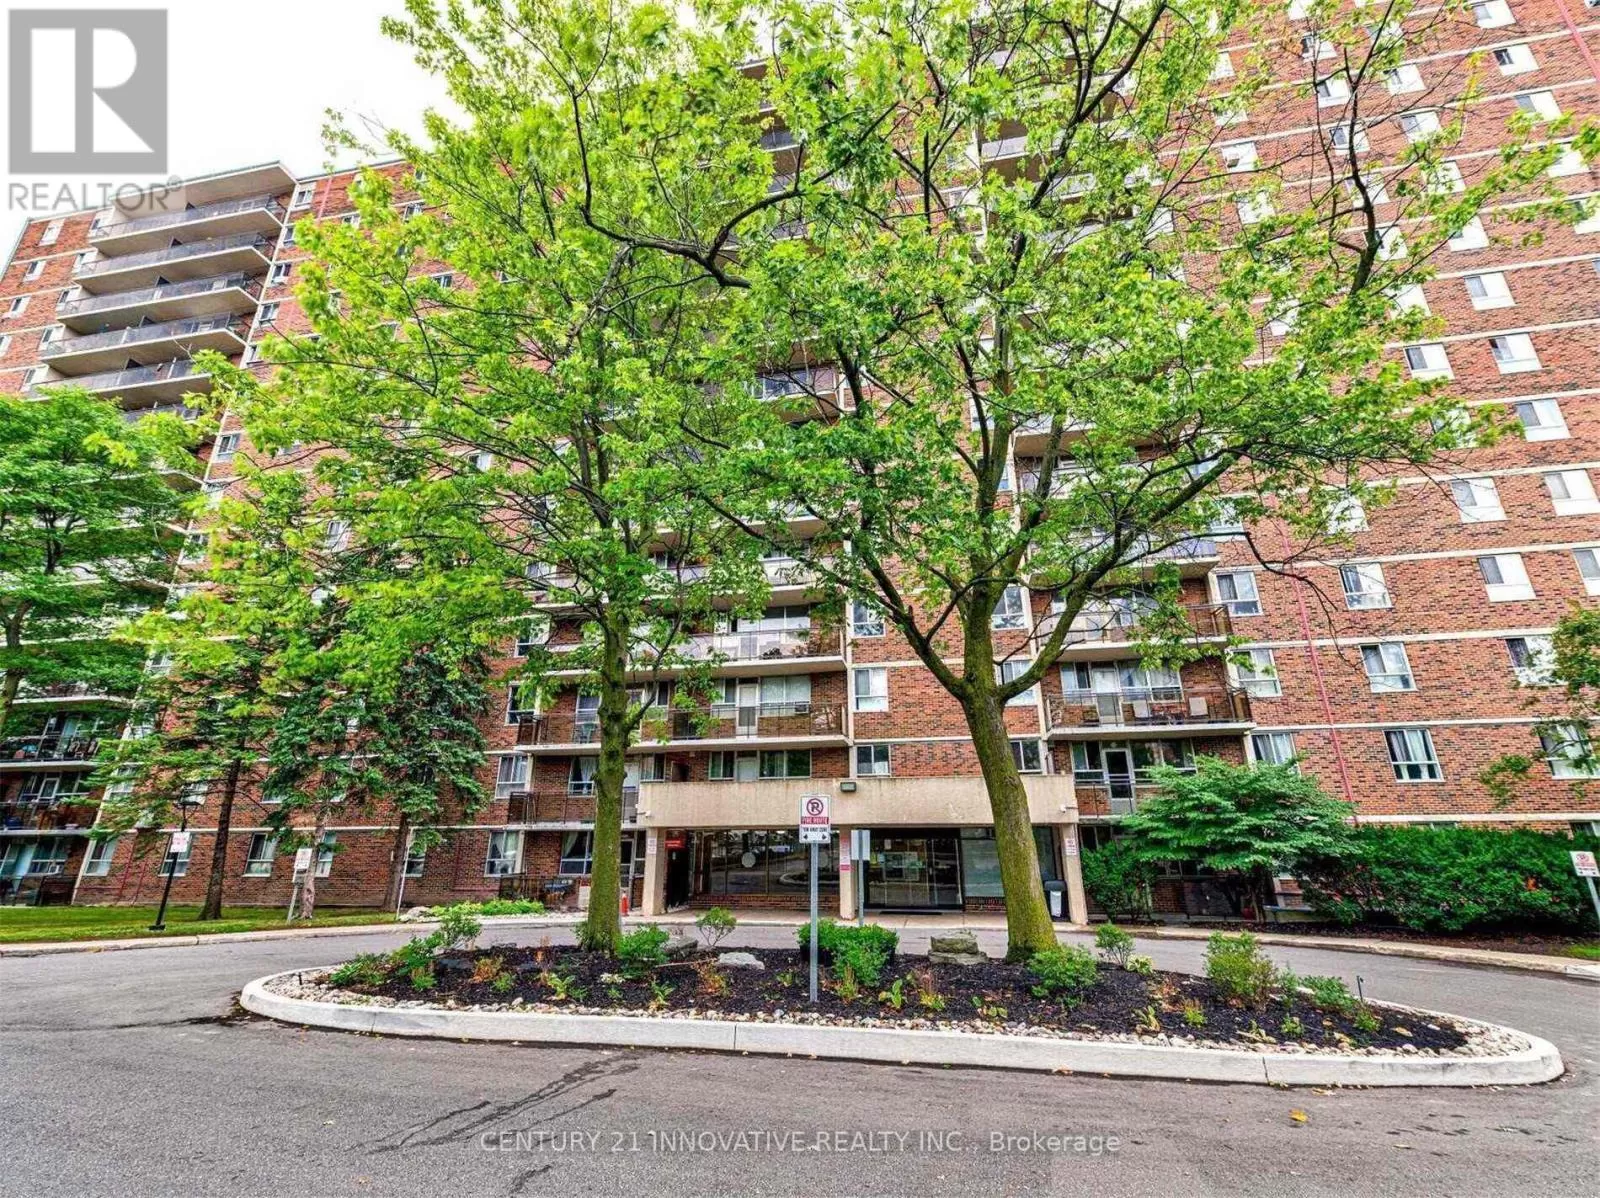 Apartment for rent: 513 - 1950 Kennedy Road, Toronto, Ontario M1B 5M6